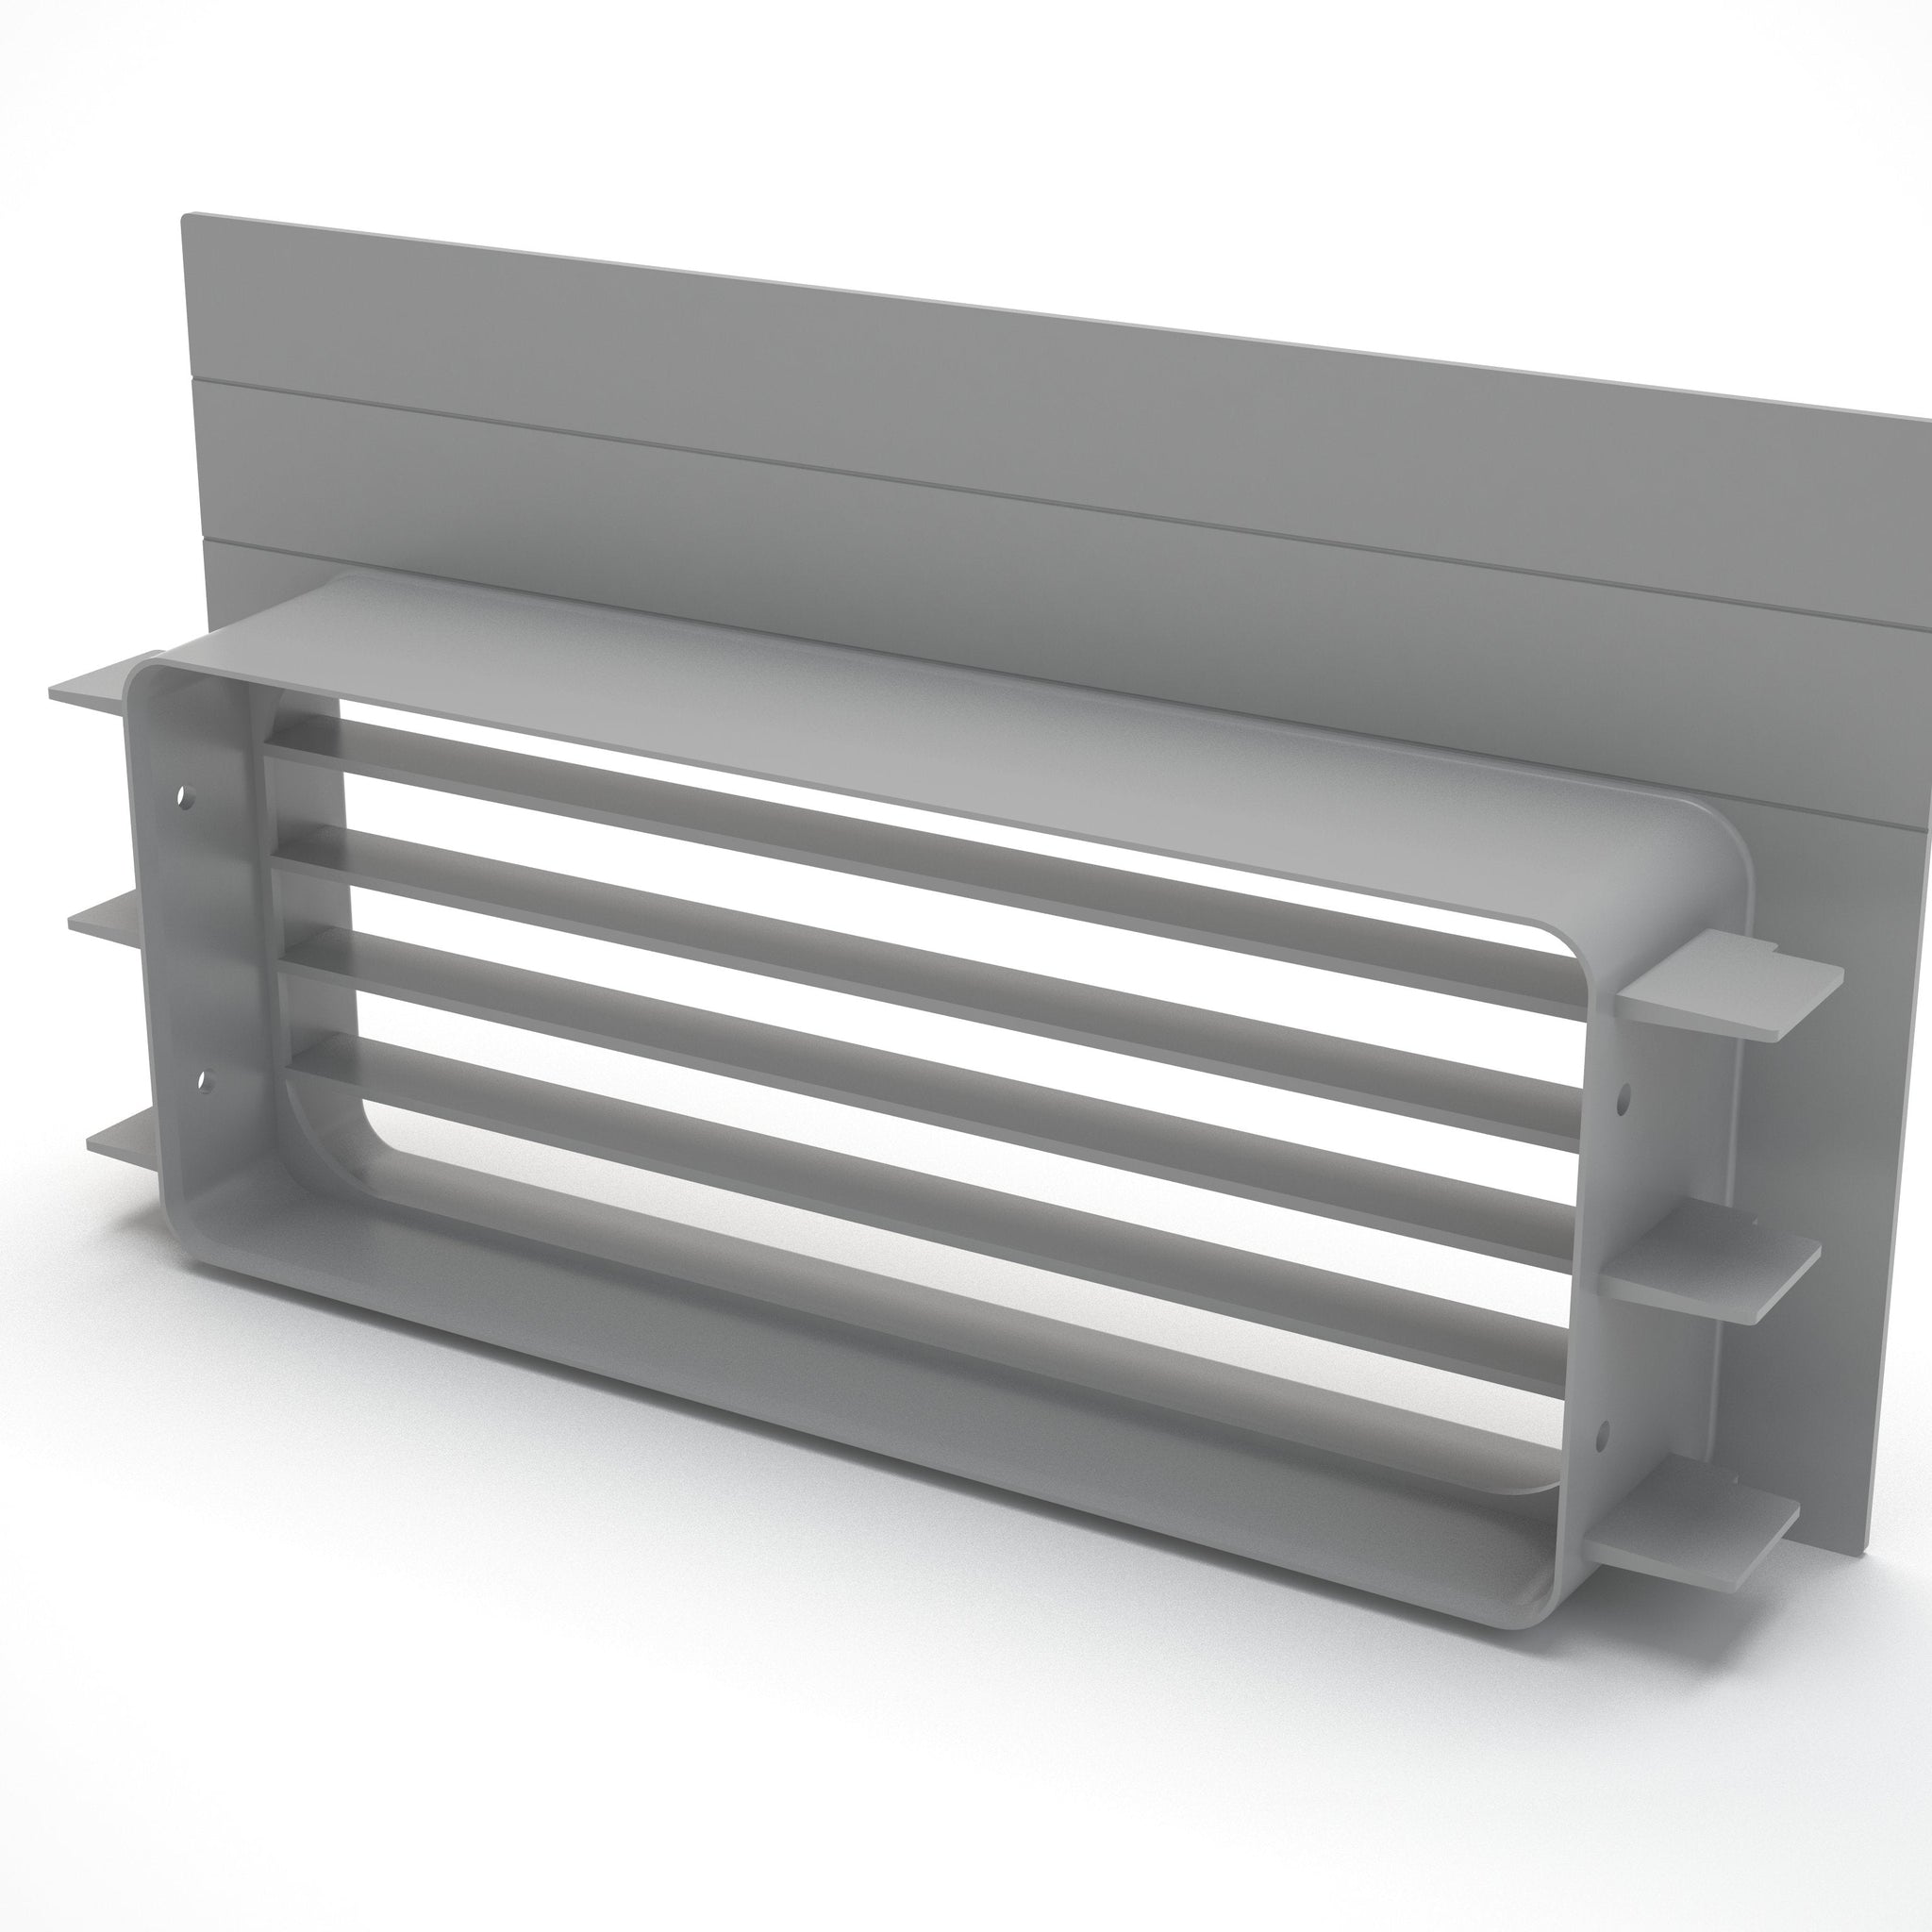 Airforce KRASP003 Kitchen Plinth Grid Kit For Recirculating Installation Rear Profile